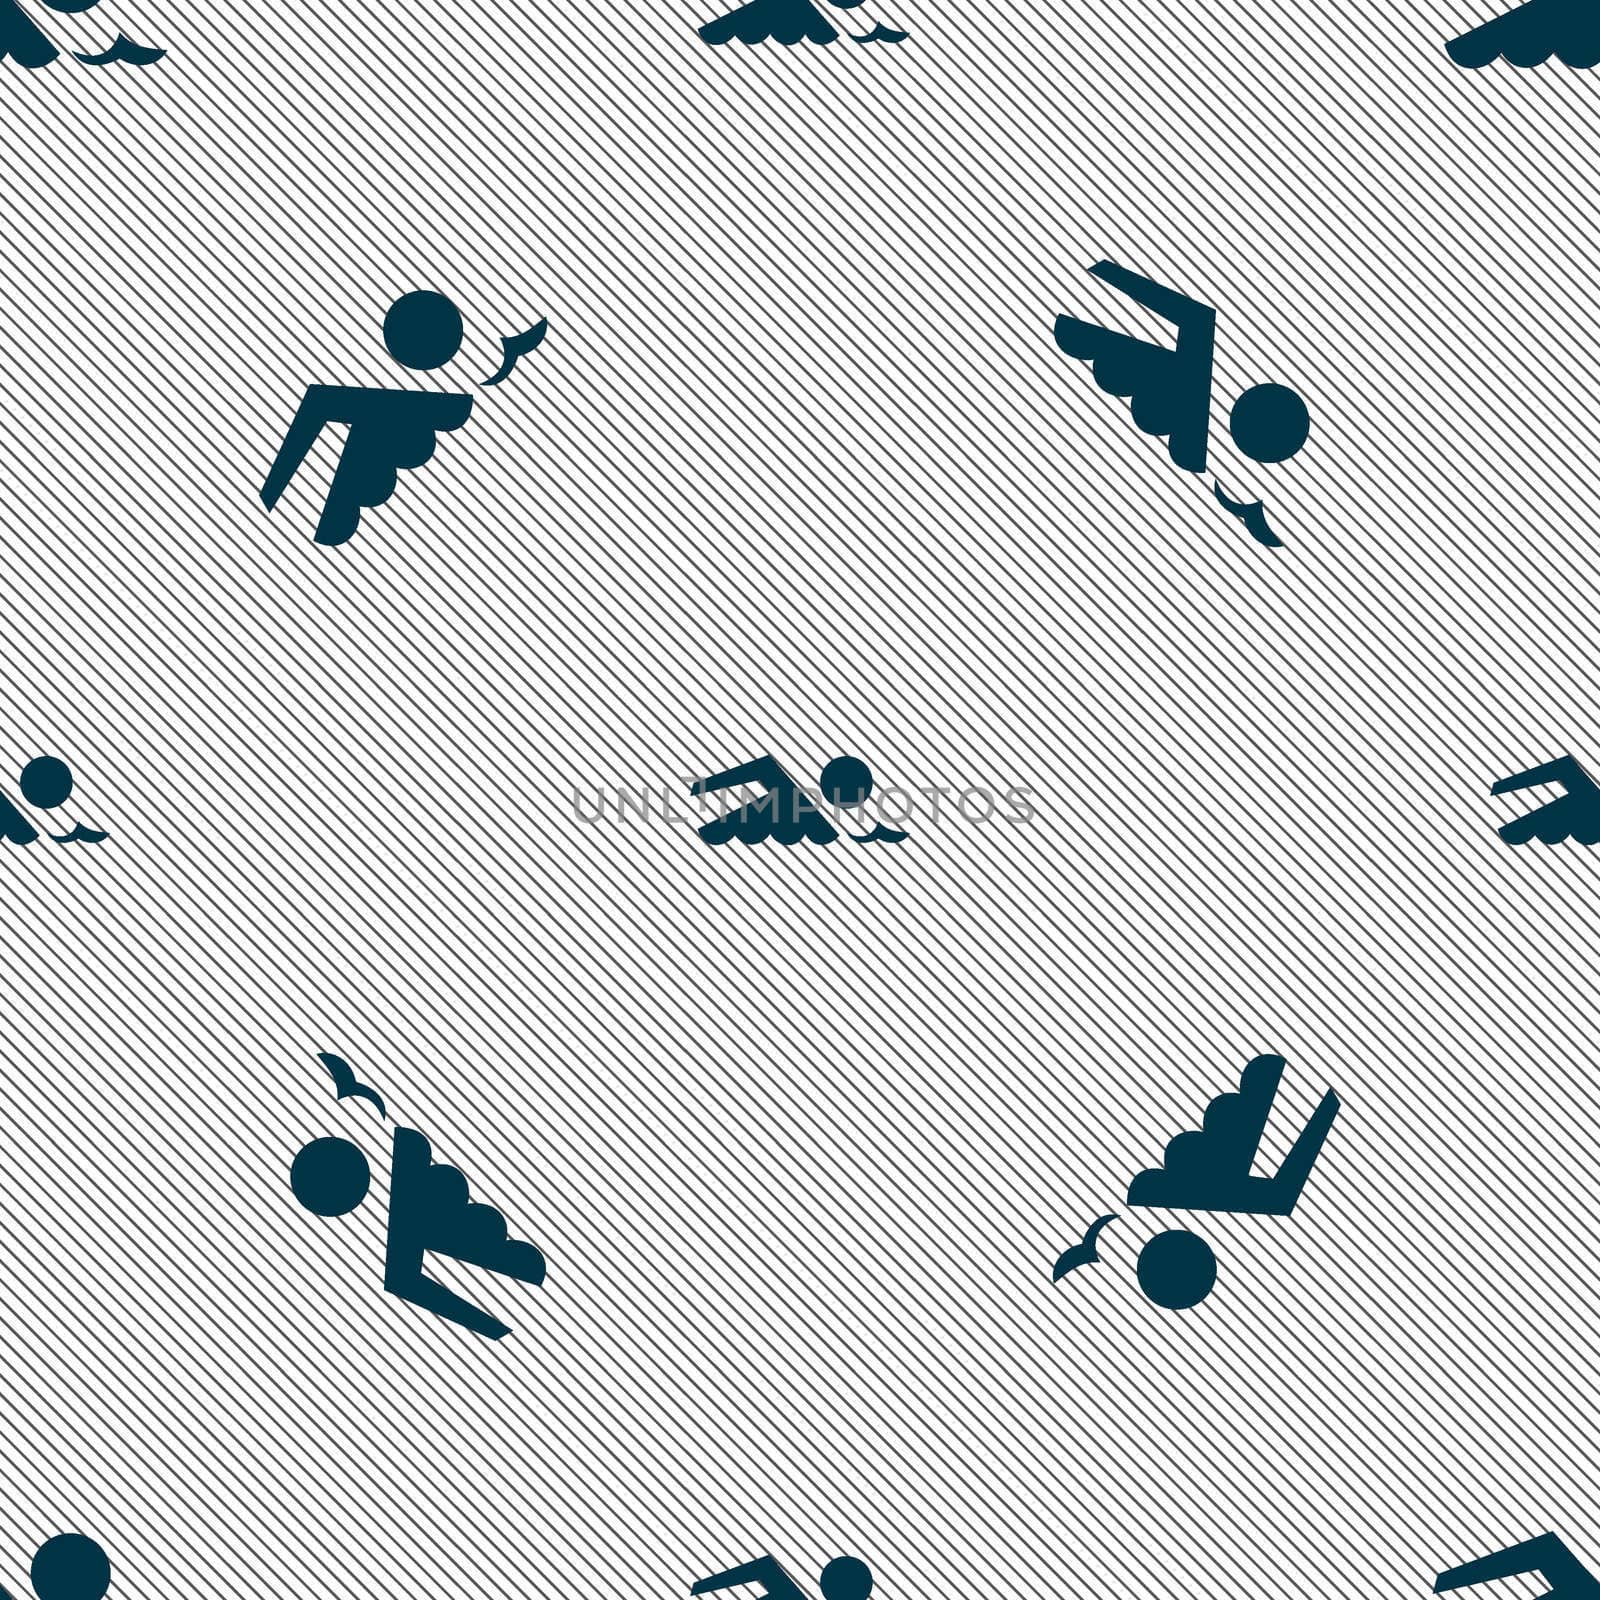 Swimming sign icon. Pool swim symbol. Sea wave. Seamless pattern with geometric texture. illustration